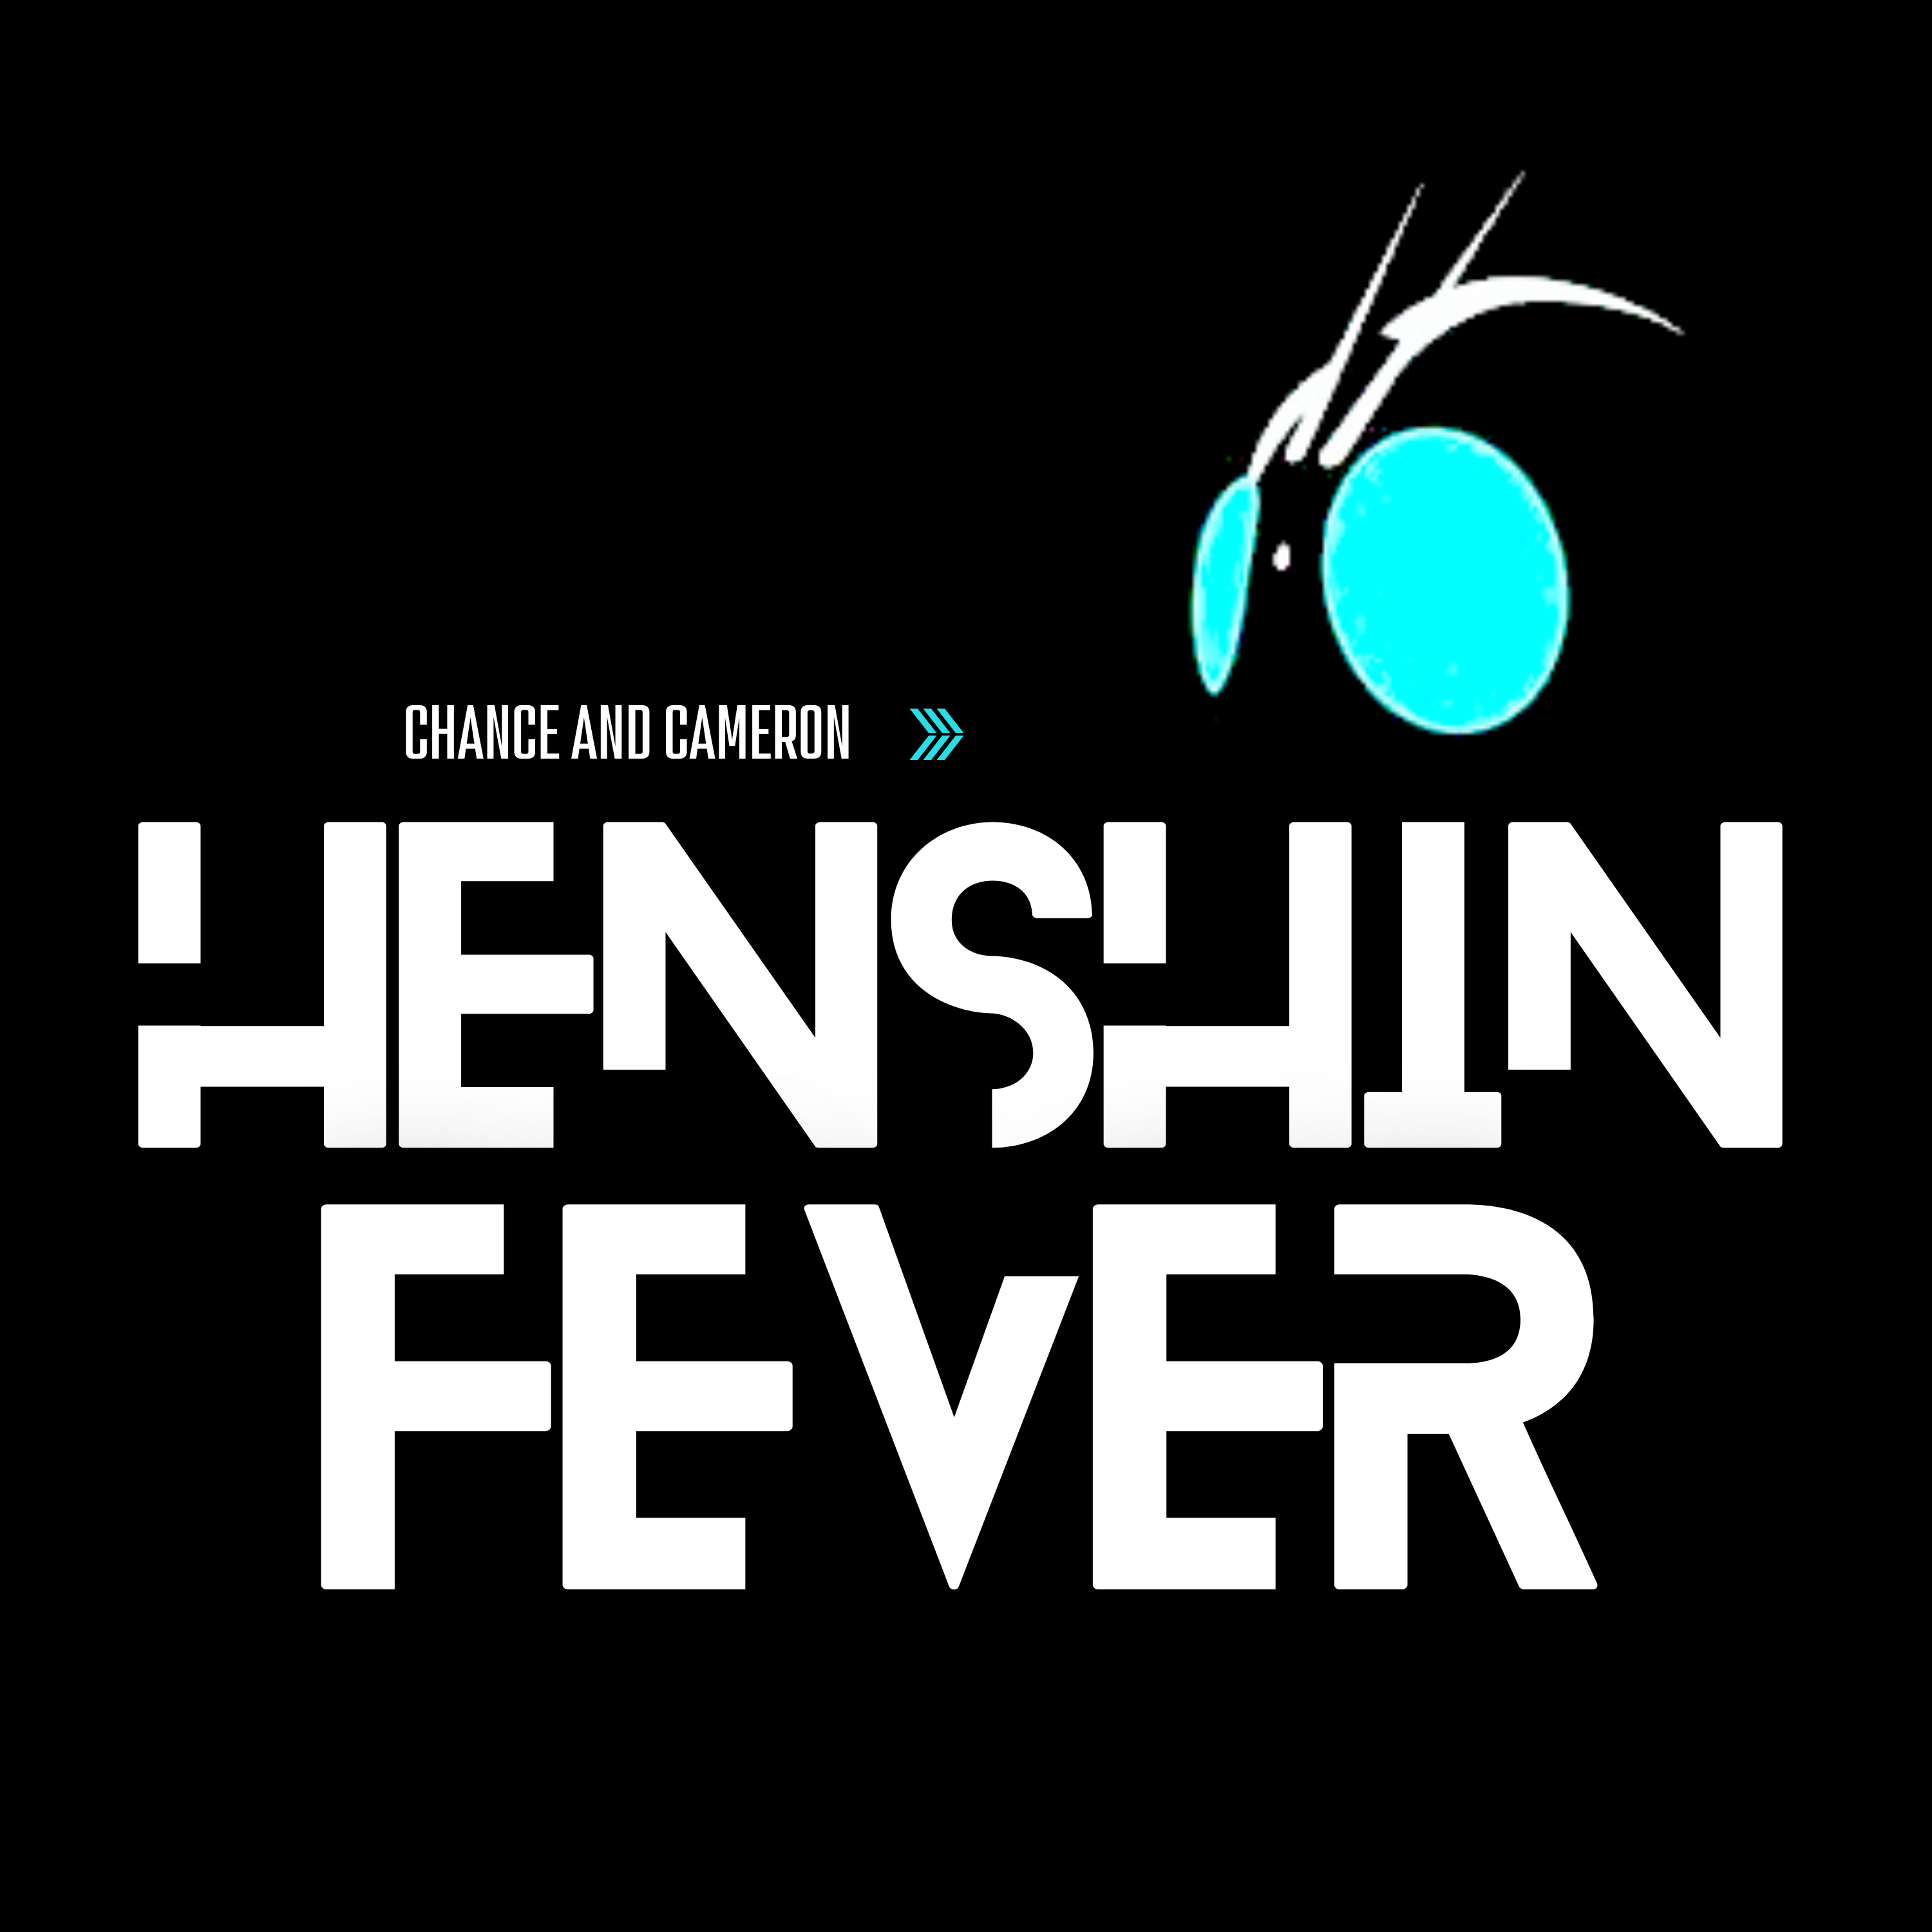 Gotchard Episodes 4 & 5 - Henshin Fever